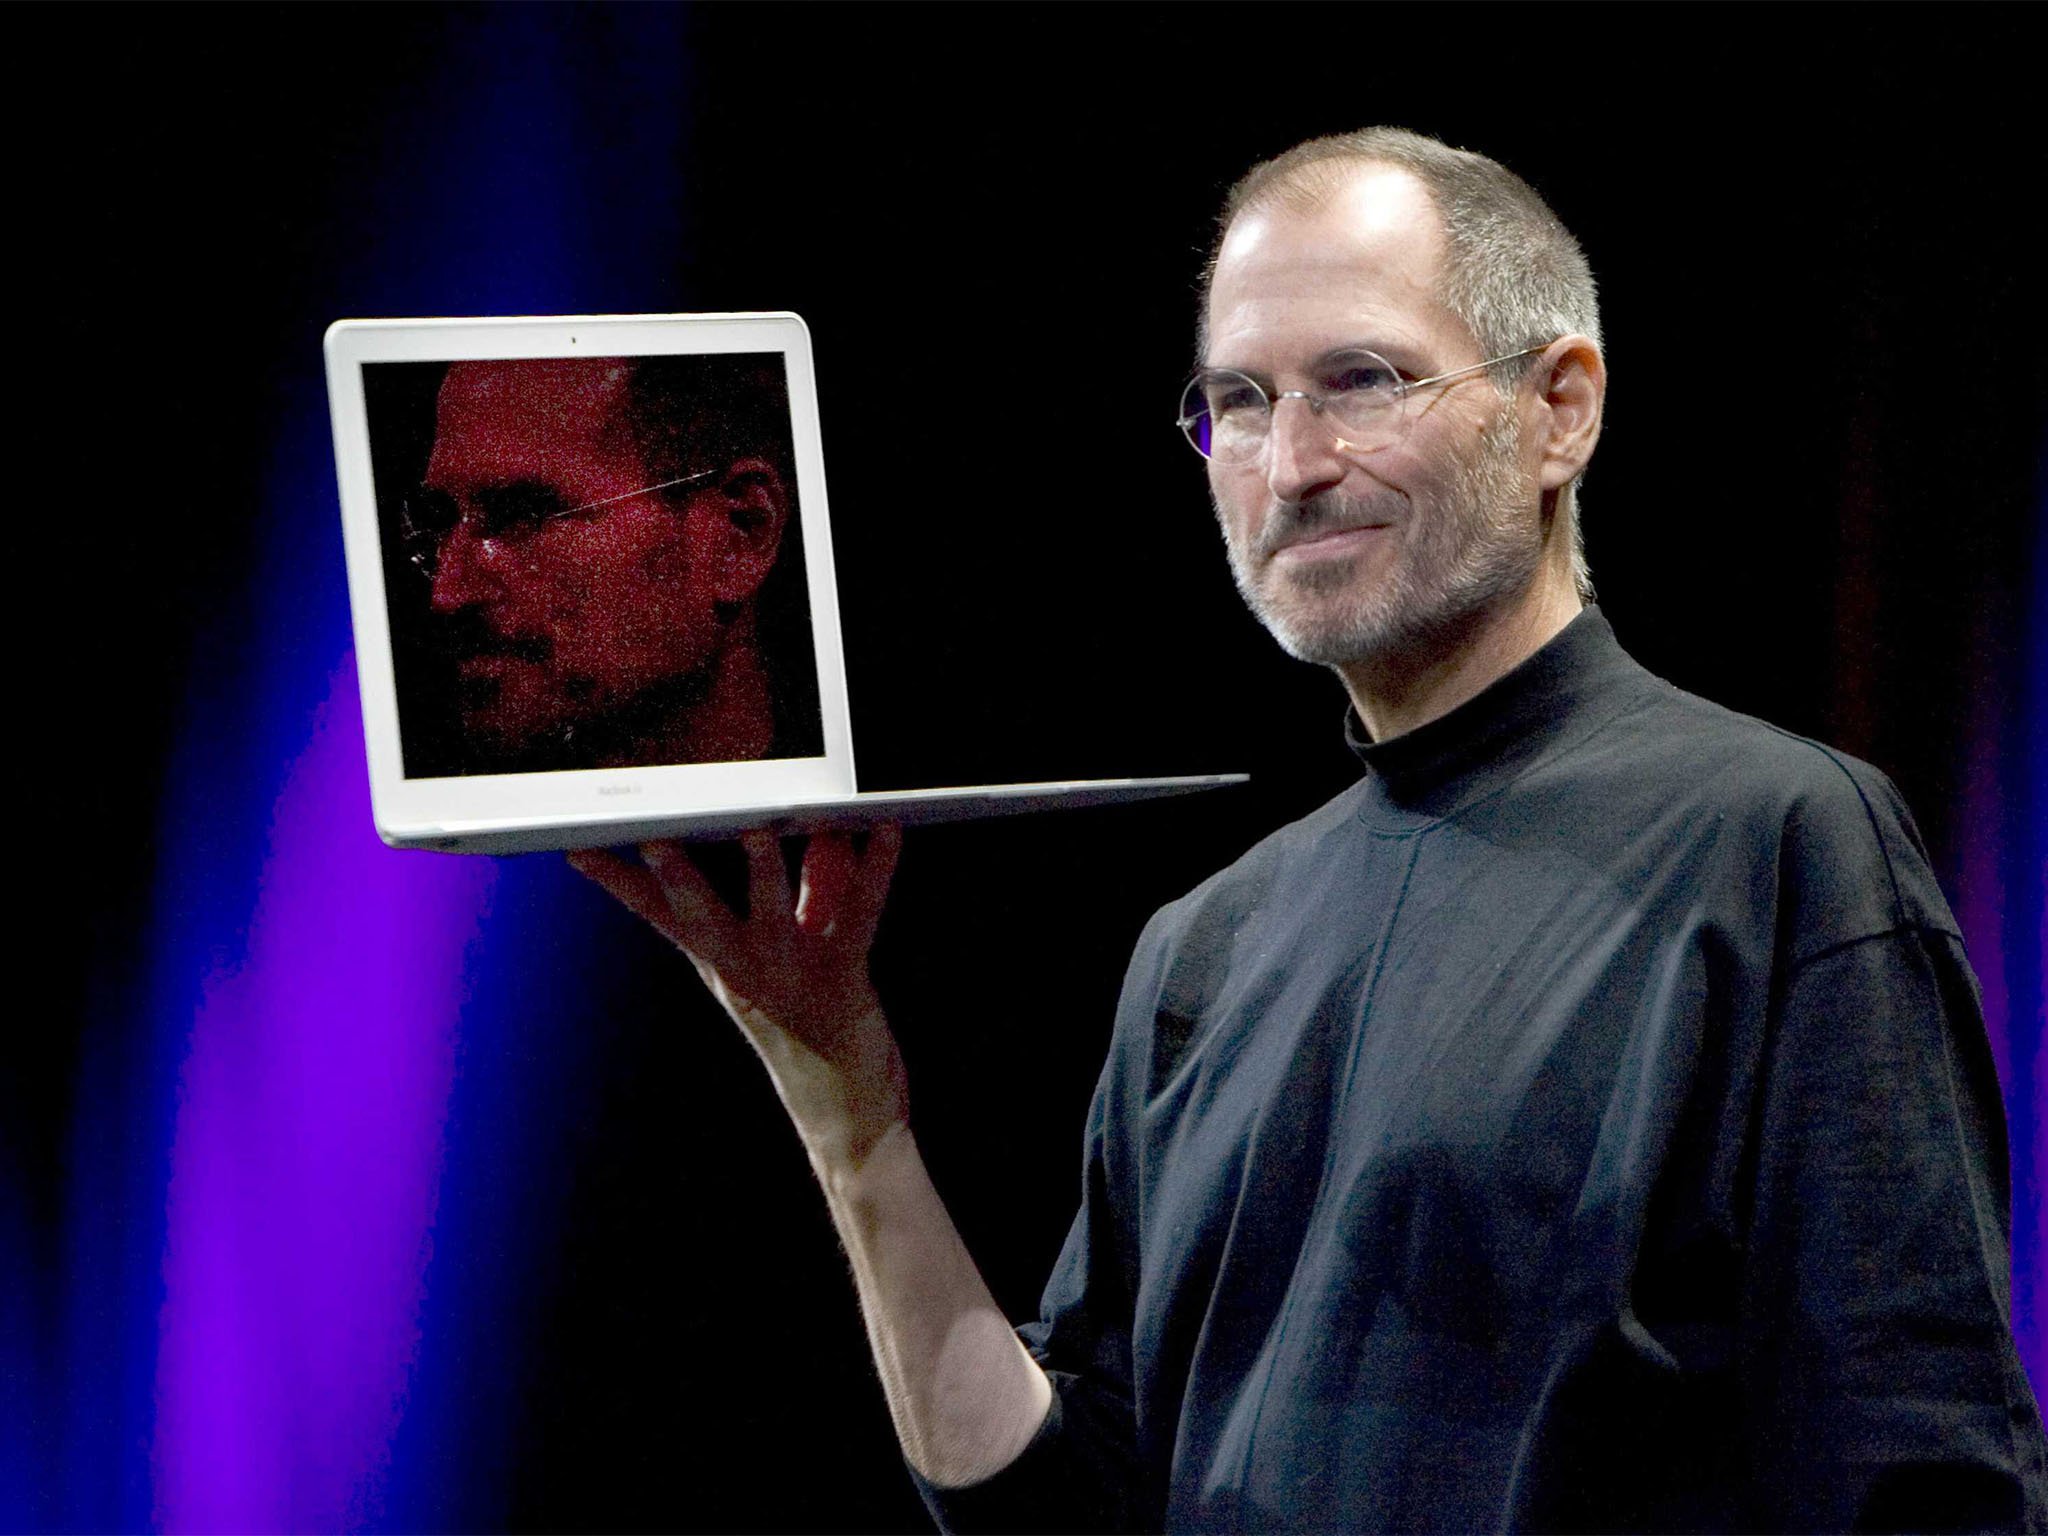 Steve Jobs unveiled the MacBook Air